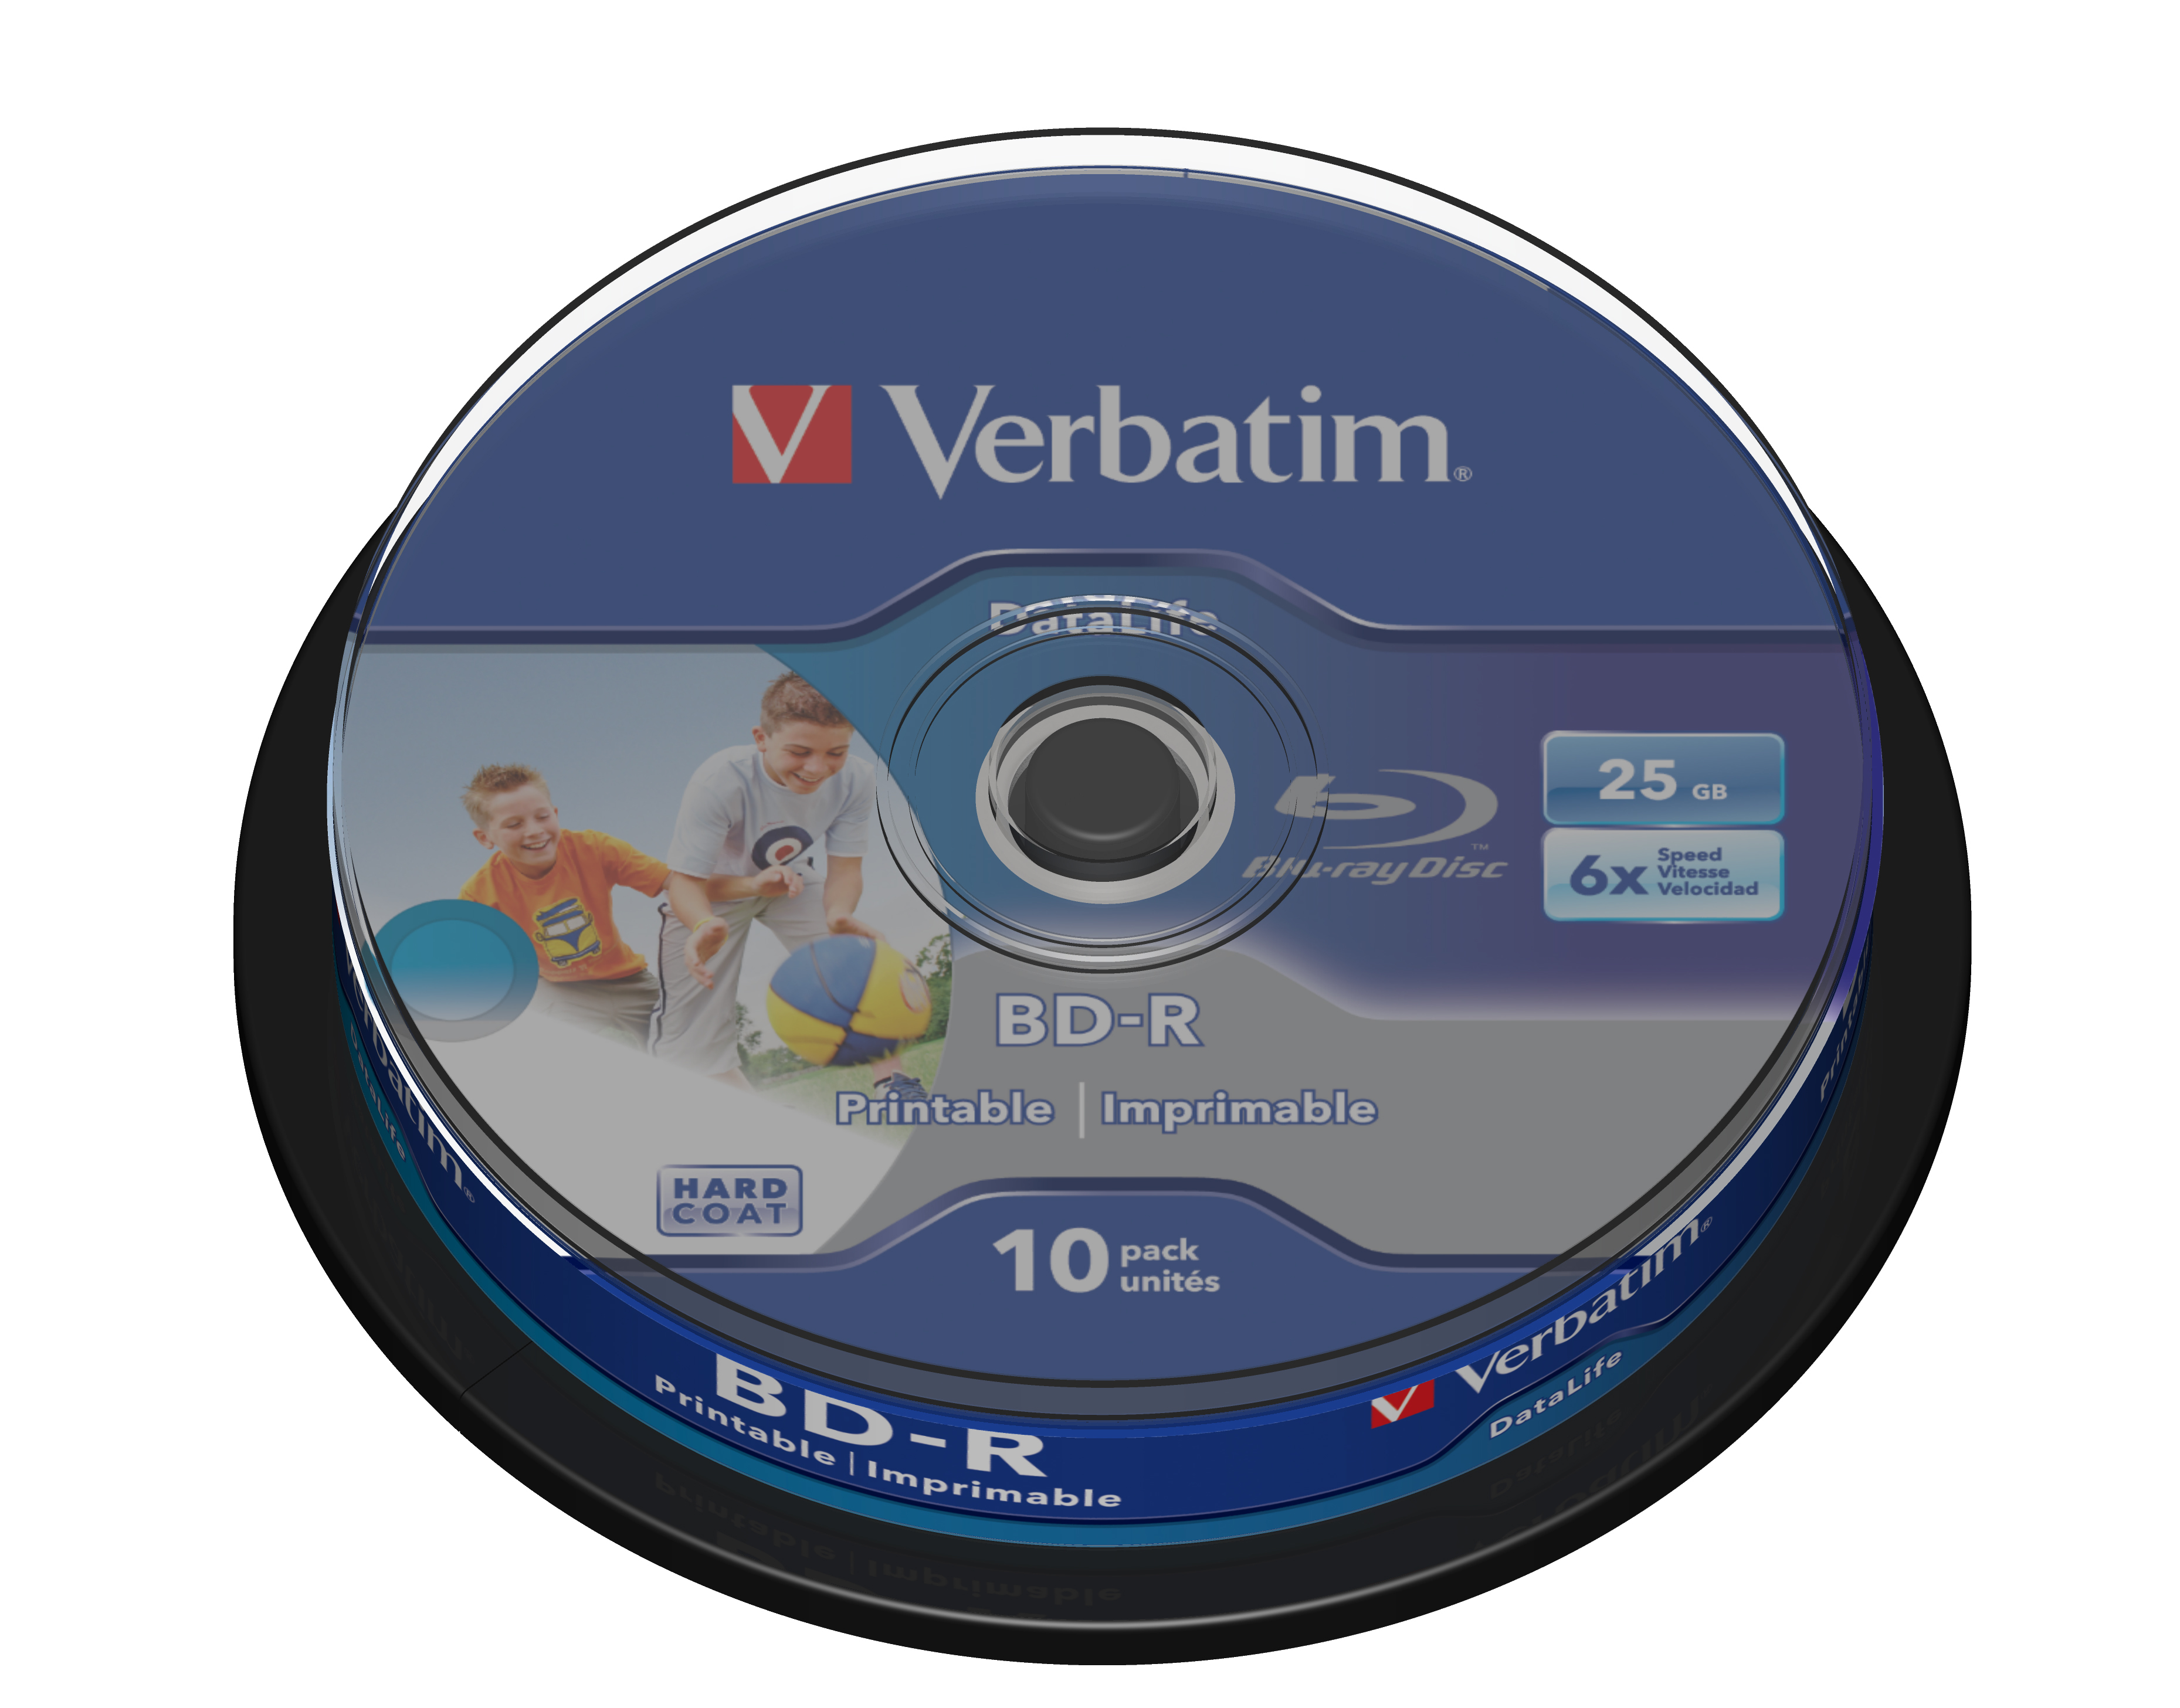 Verbatim Datalife 6x BD-R 25 GB 10 stk